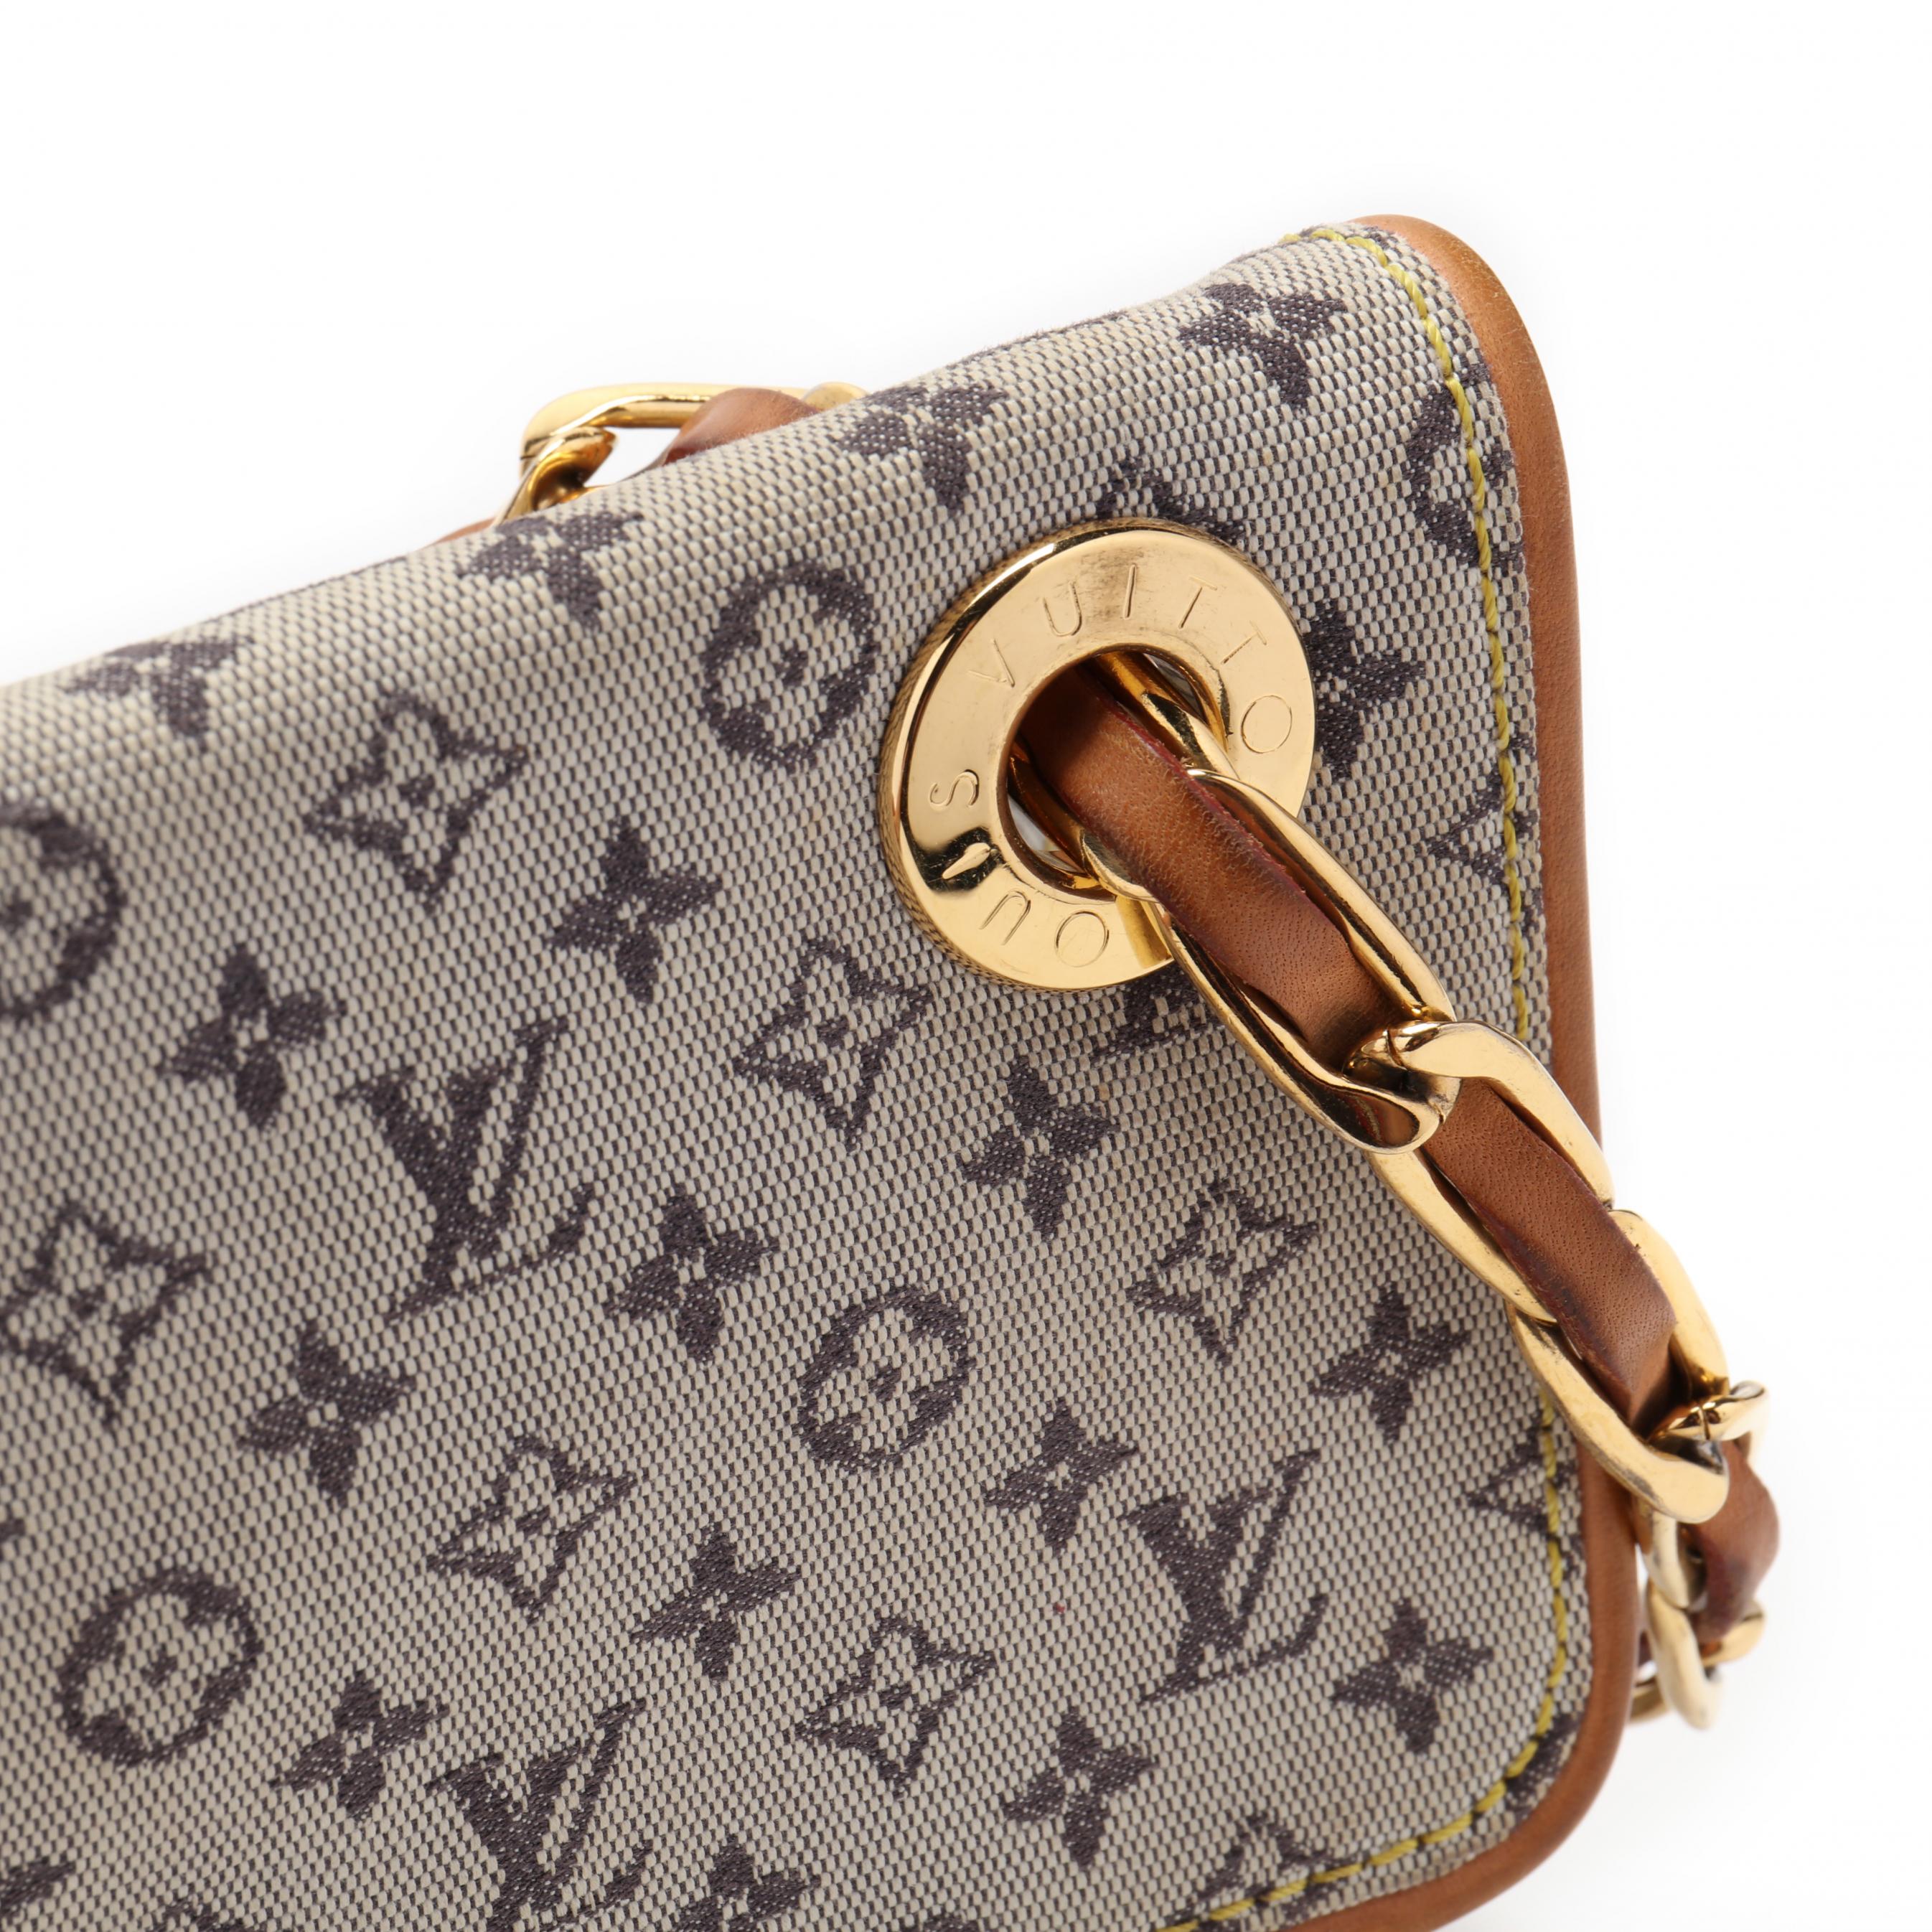 Mini-Lin Messenger Bag, Camille, Louis Vuitton (Lot 167 - The